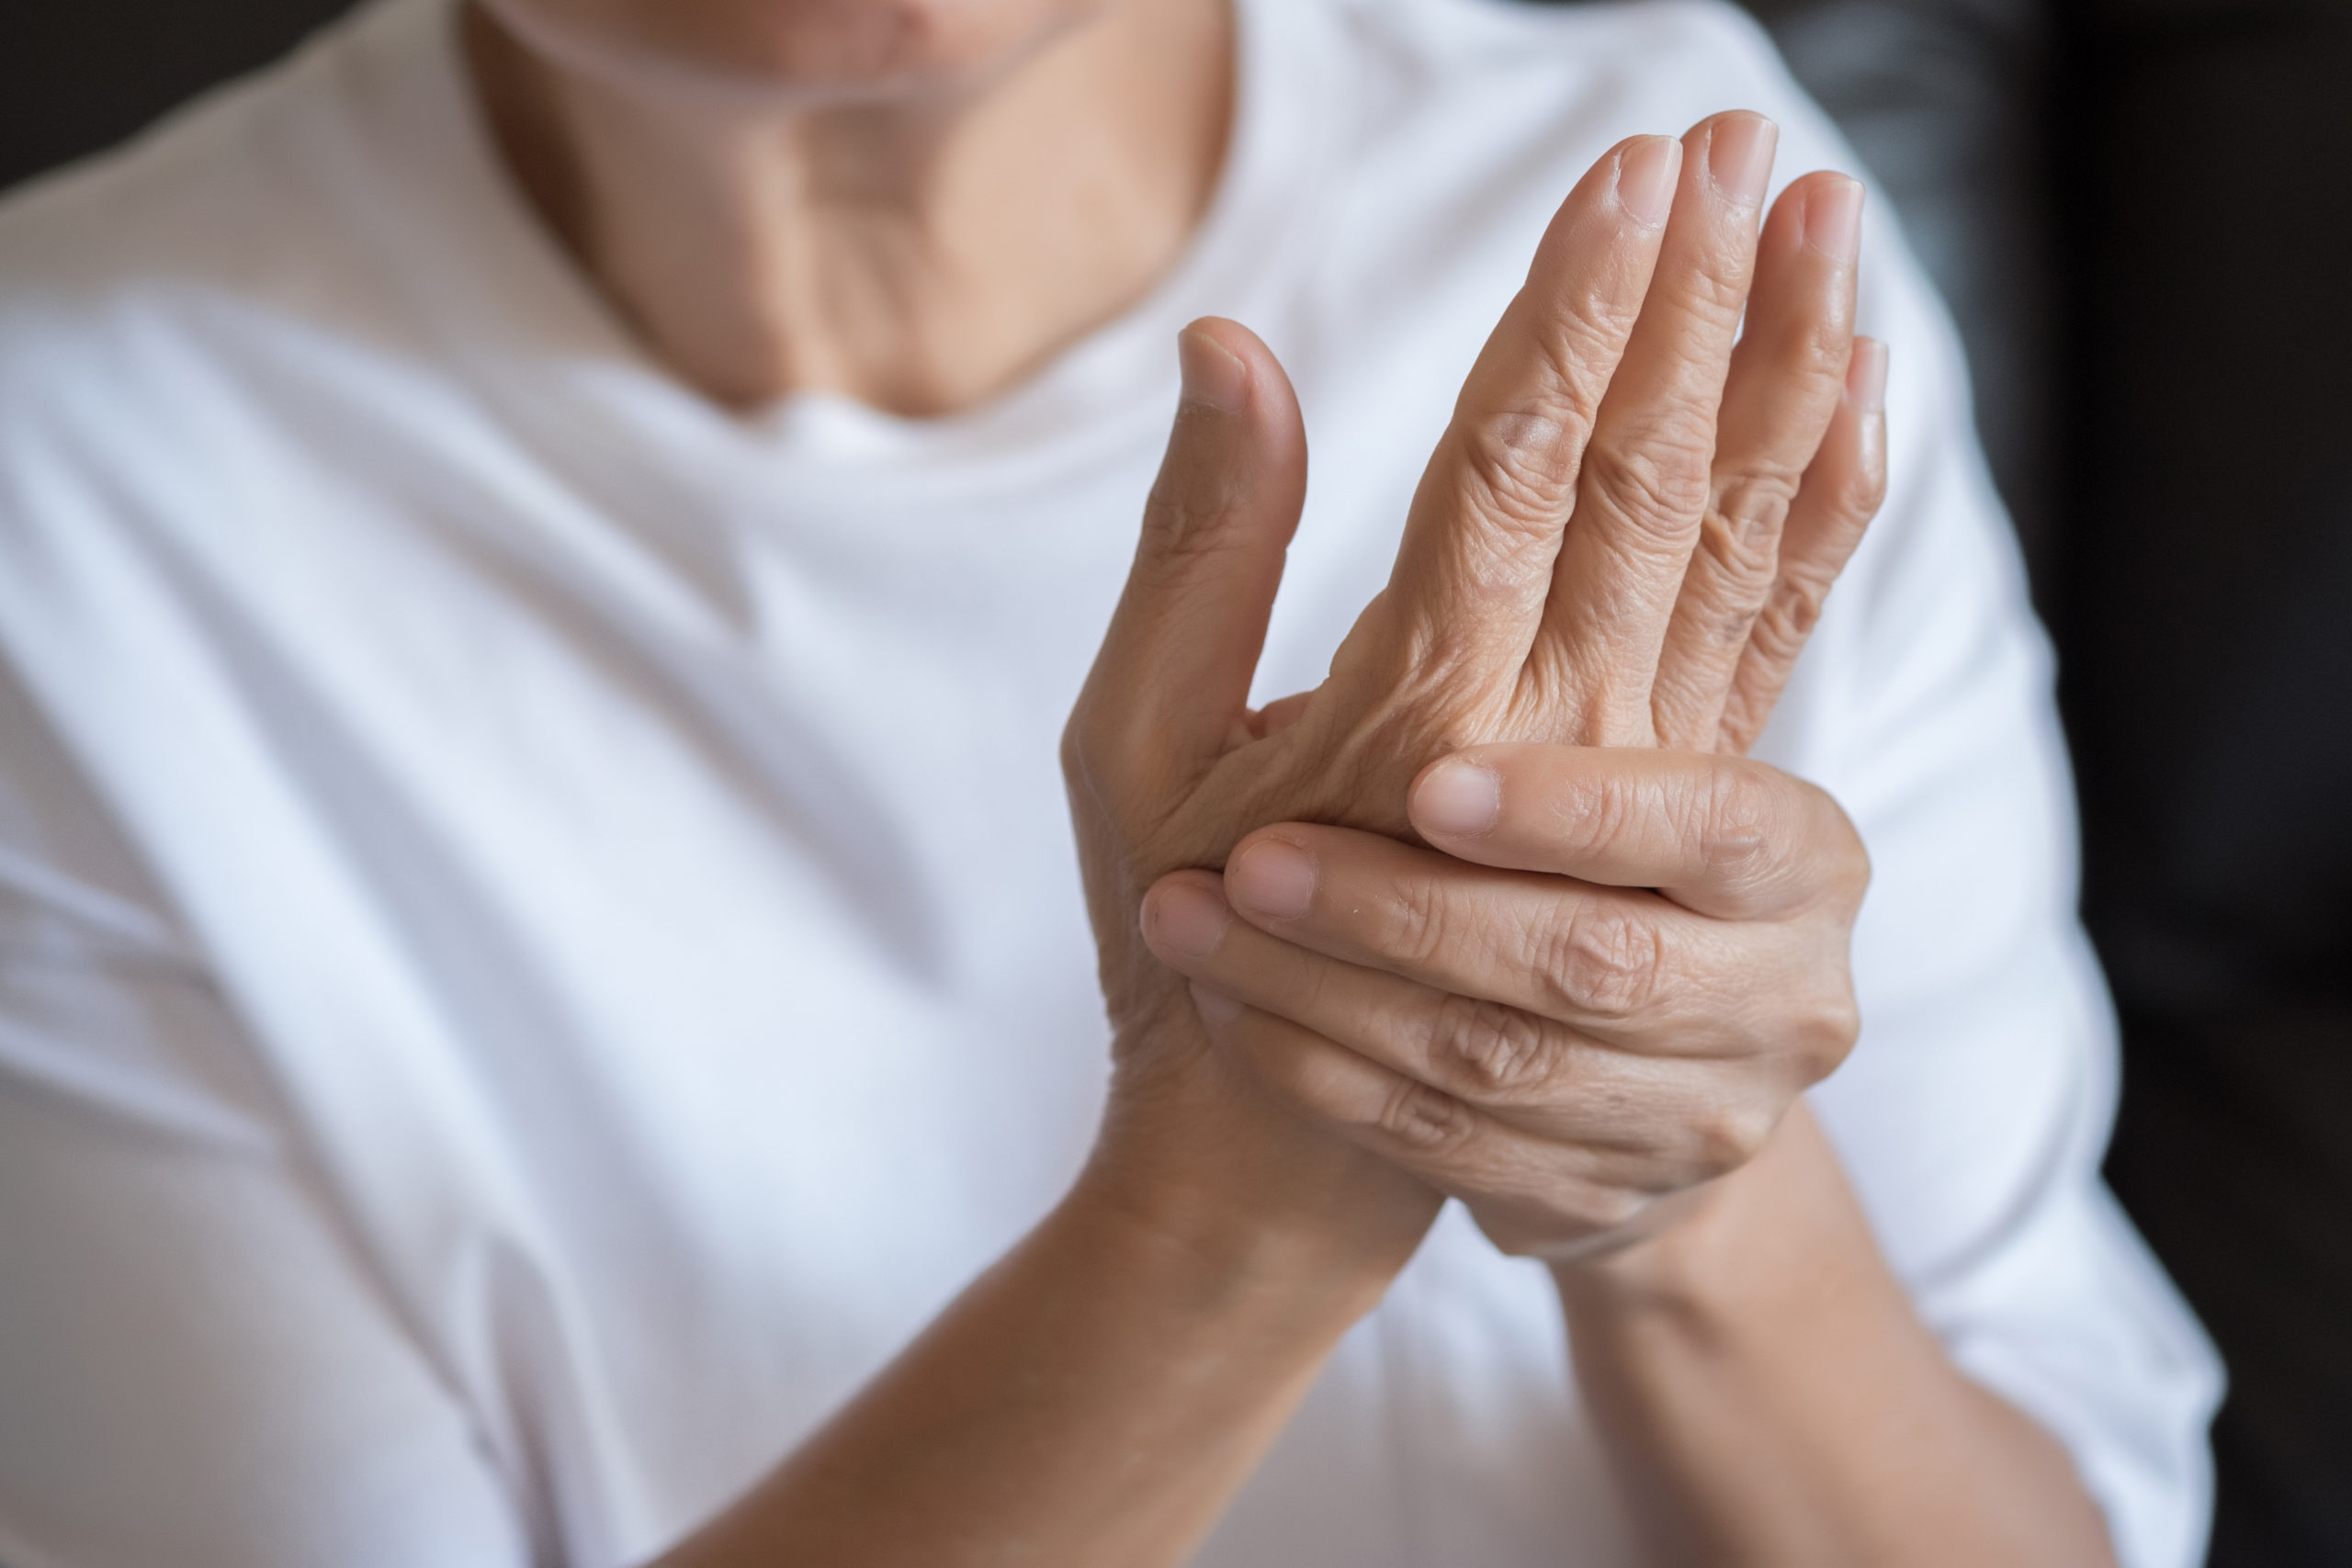 Biomarkers for Distinguishing Rheumatoid Arthritis From Osteoarthritis